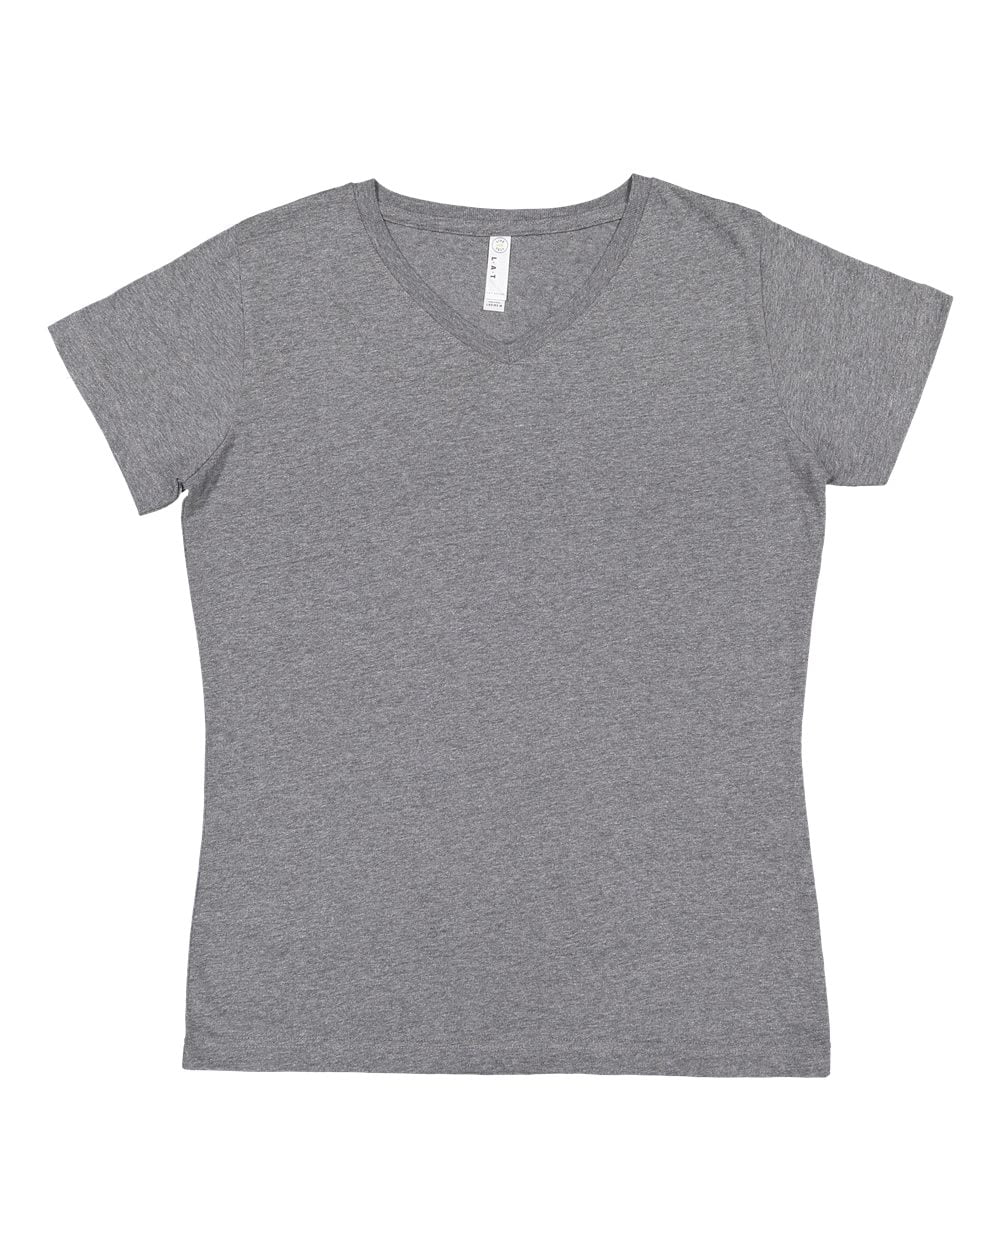 LAT Apparel - Ladies' Premium Jersey V-Neck T-Shirt - GRANITE HEATHER ...